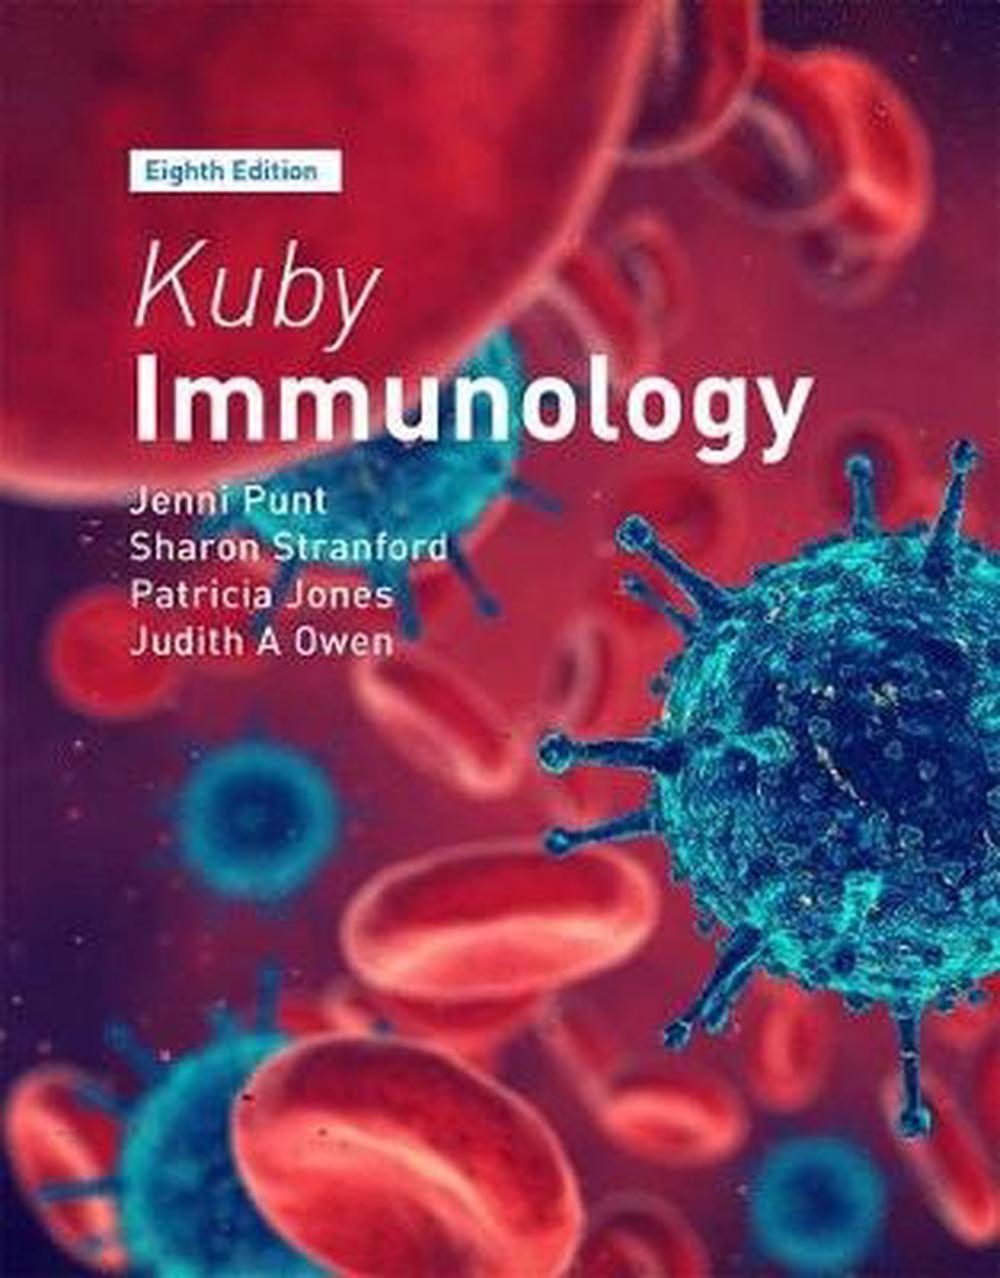 abbas basic immunology 5th edition pdf free download